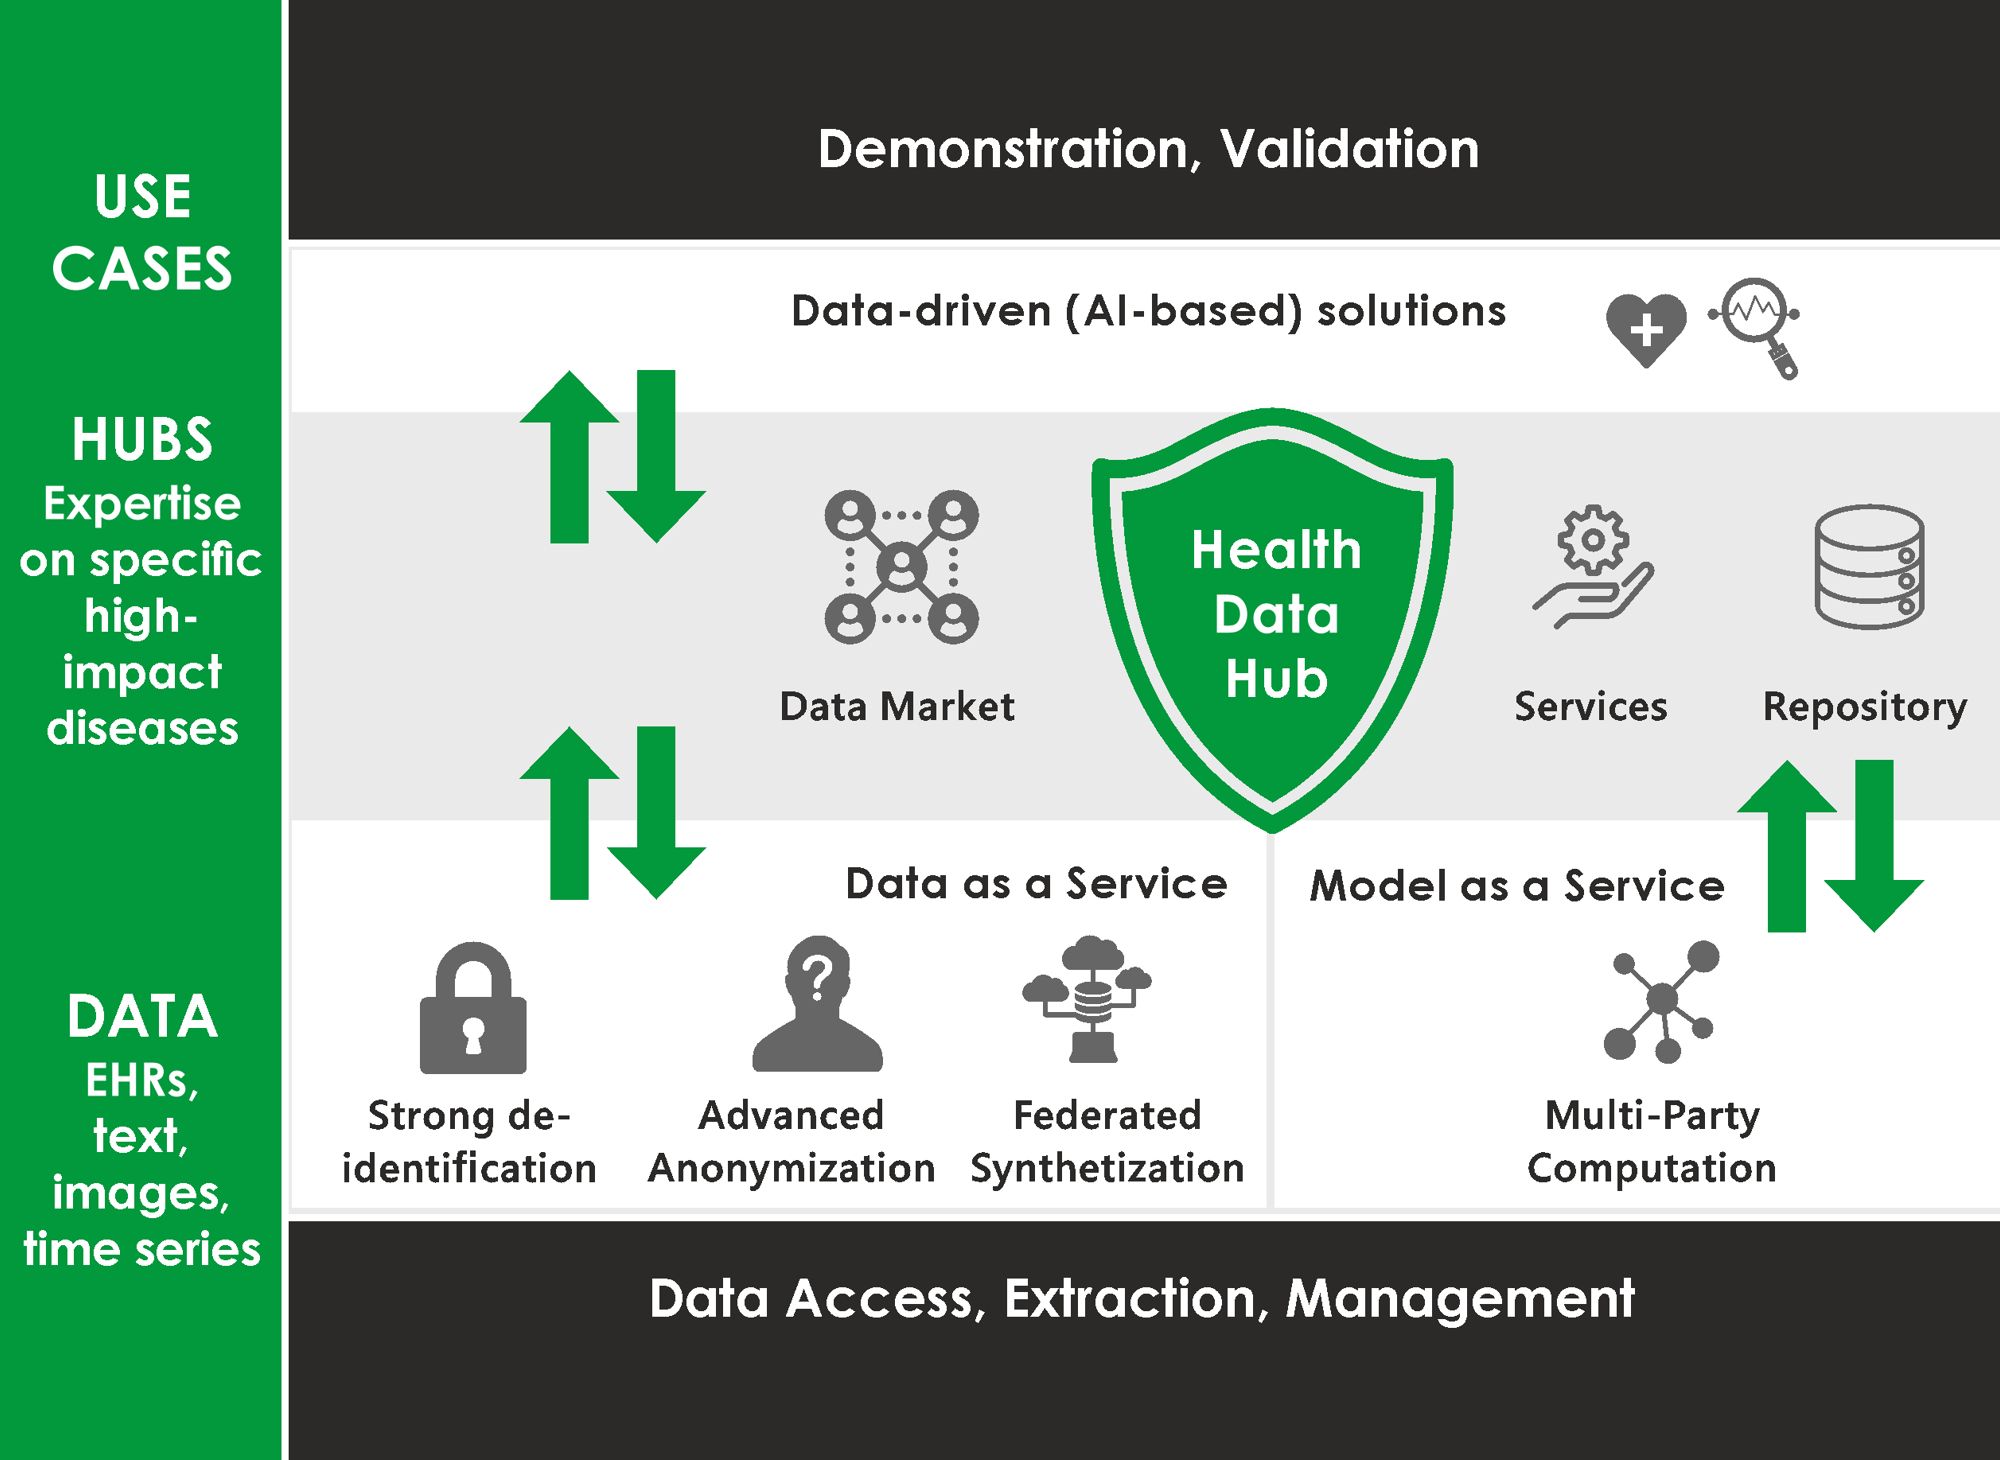 Privacy compliant health data as a service for AI development